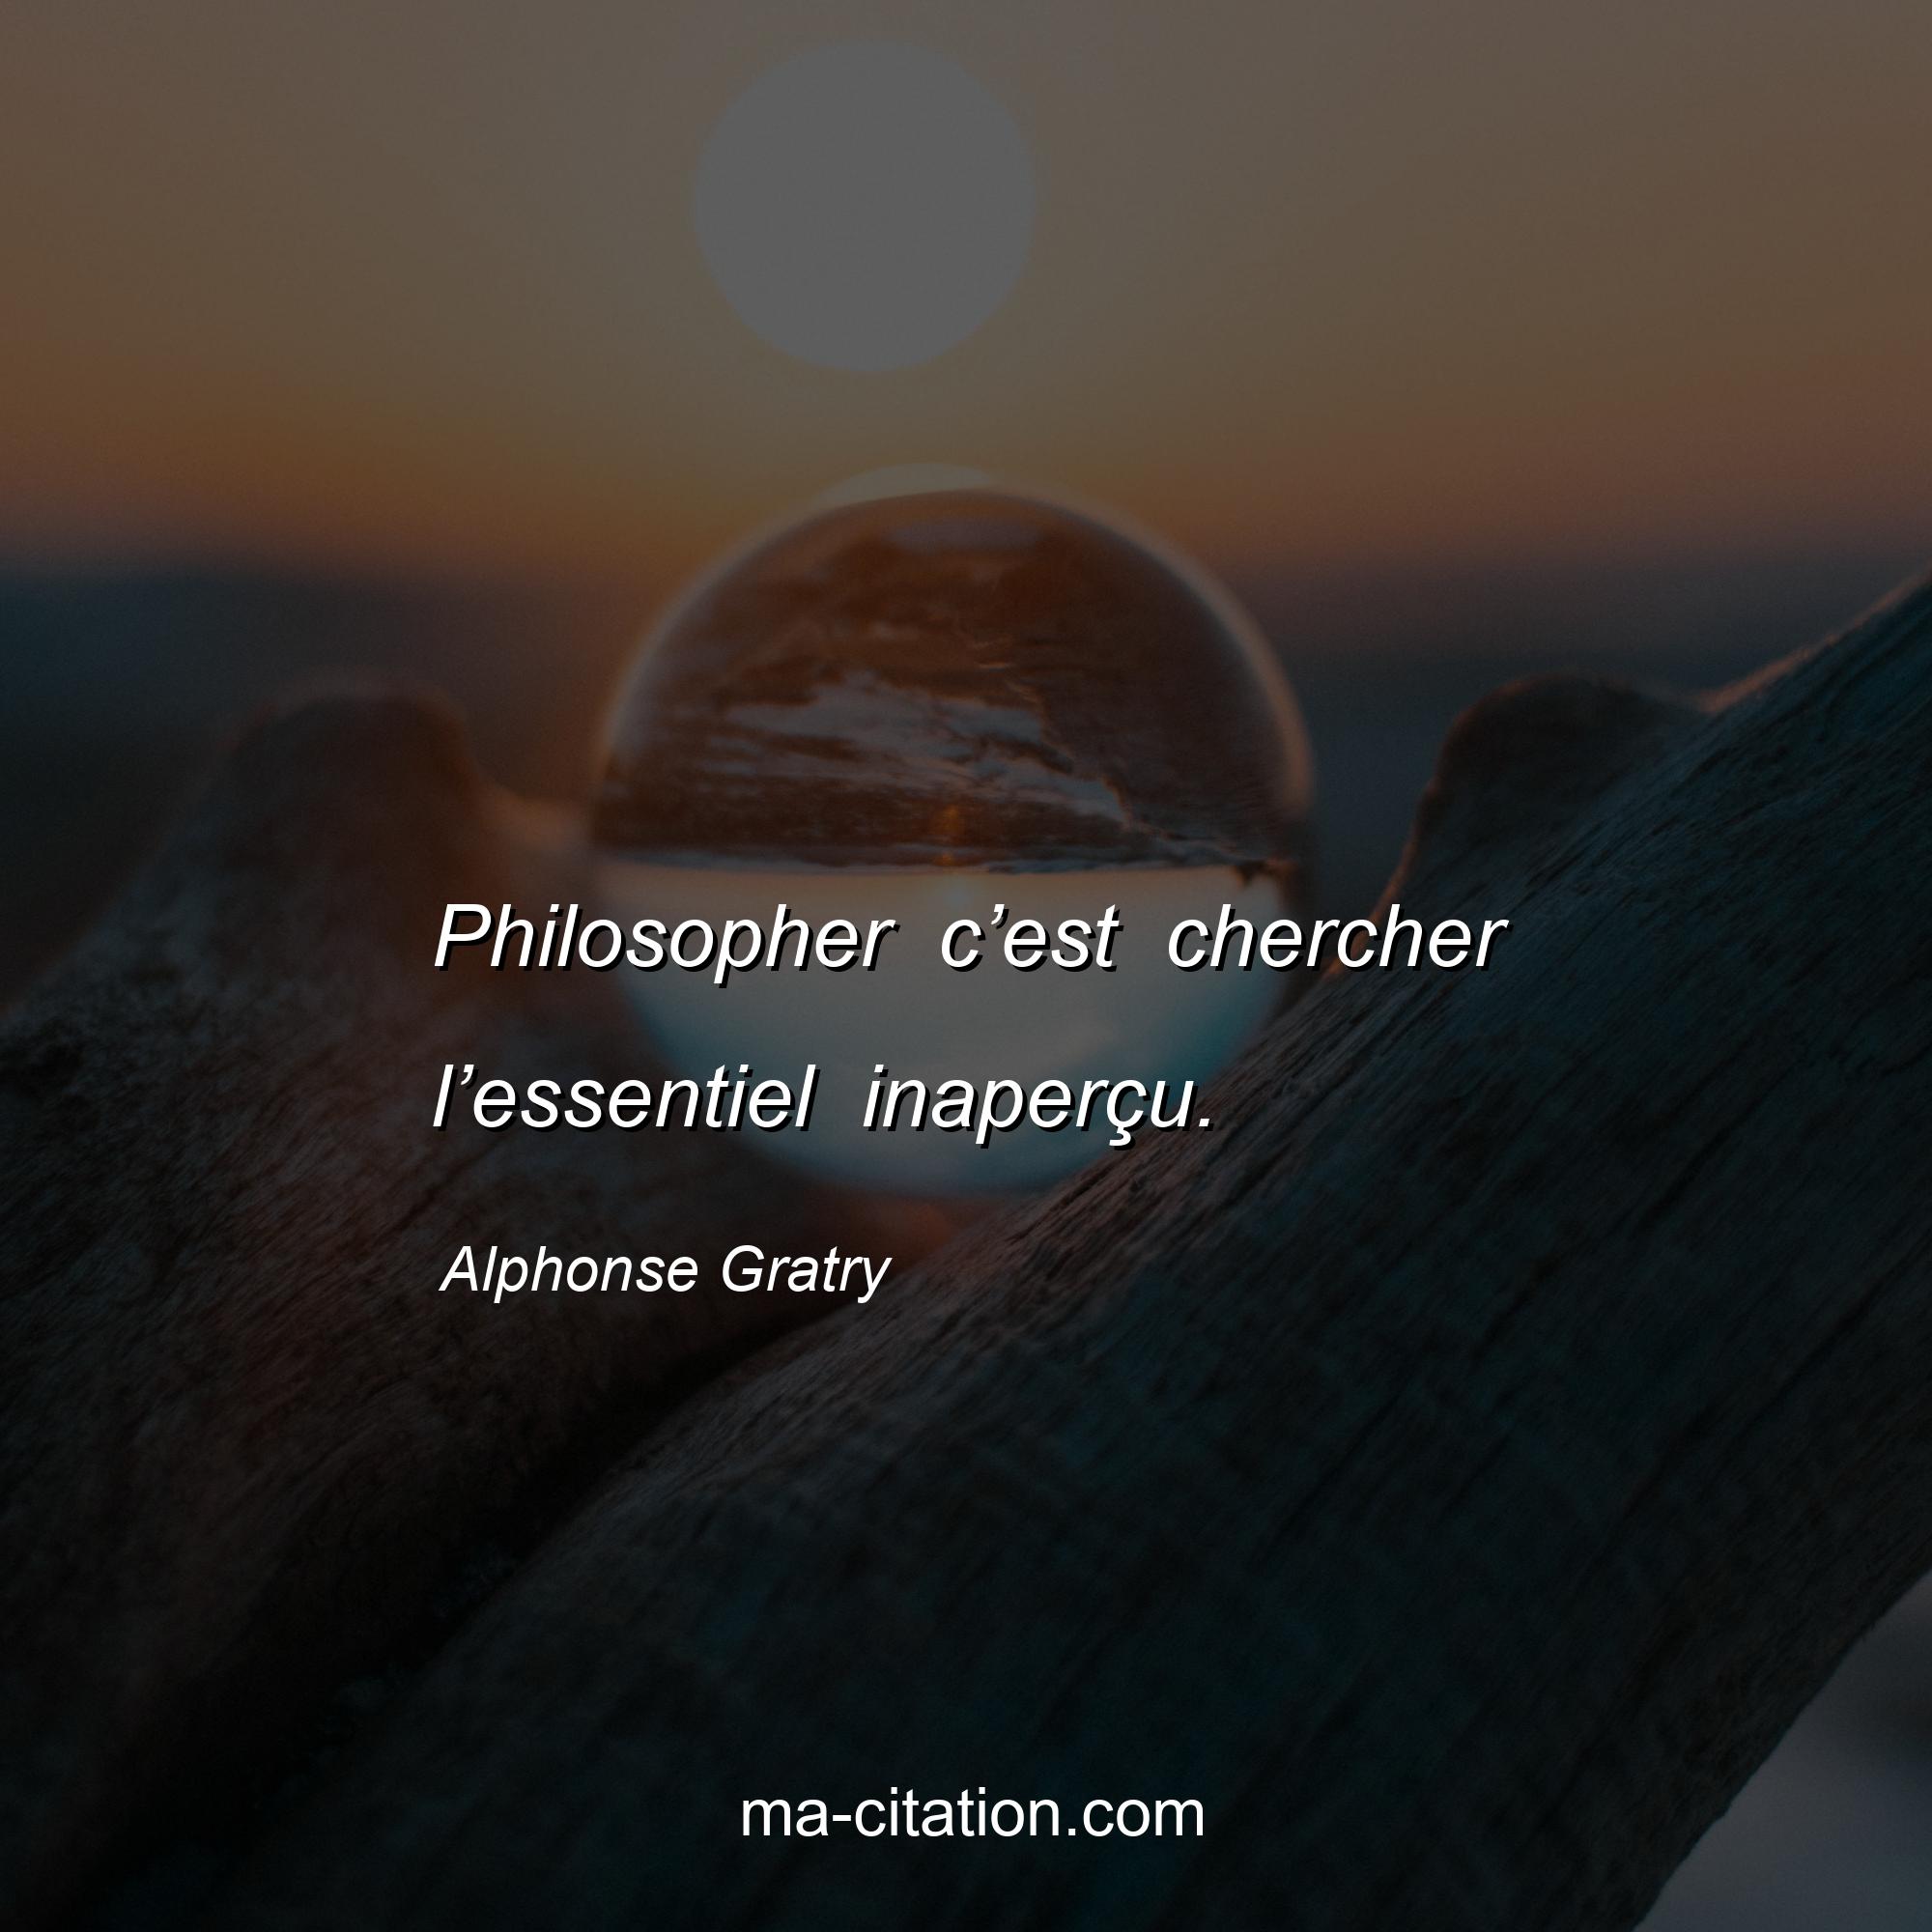 Alphonse Gratry : Philosopher c’est chercher l’essentiel inaperçu.